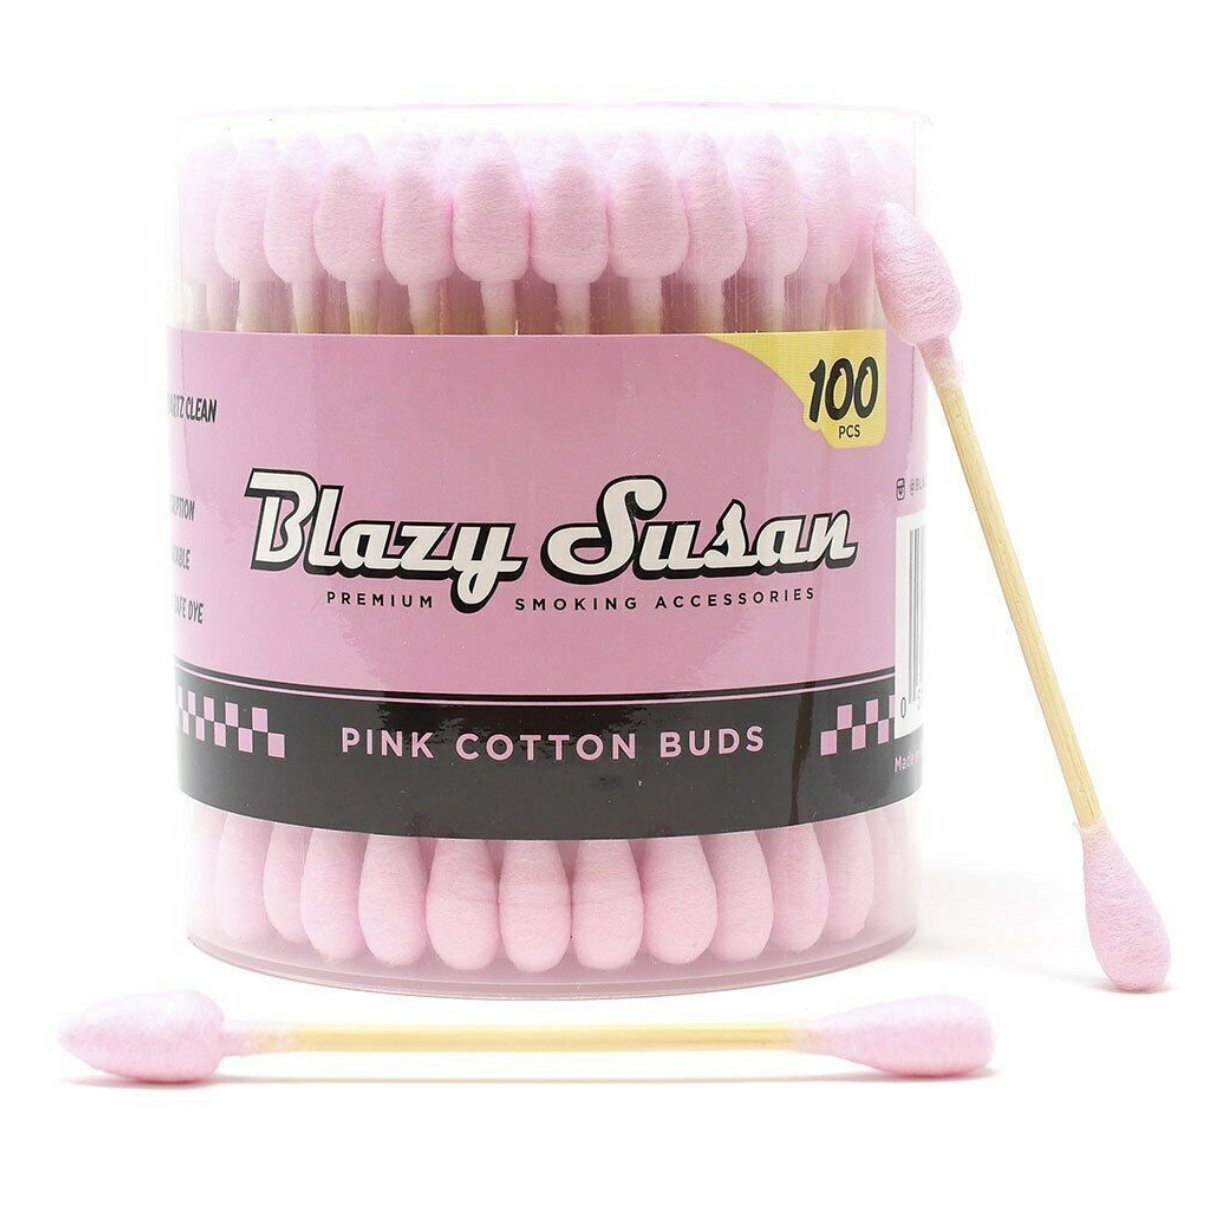 Pink Cotton Buds, 100 ct